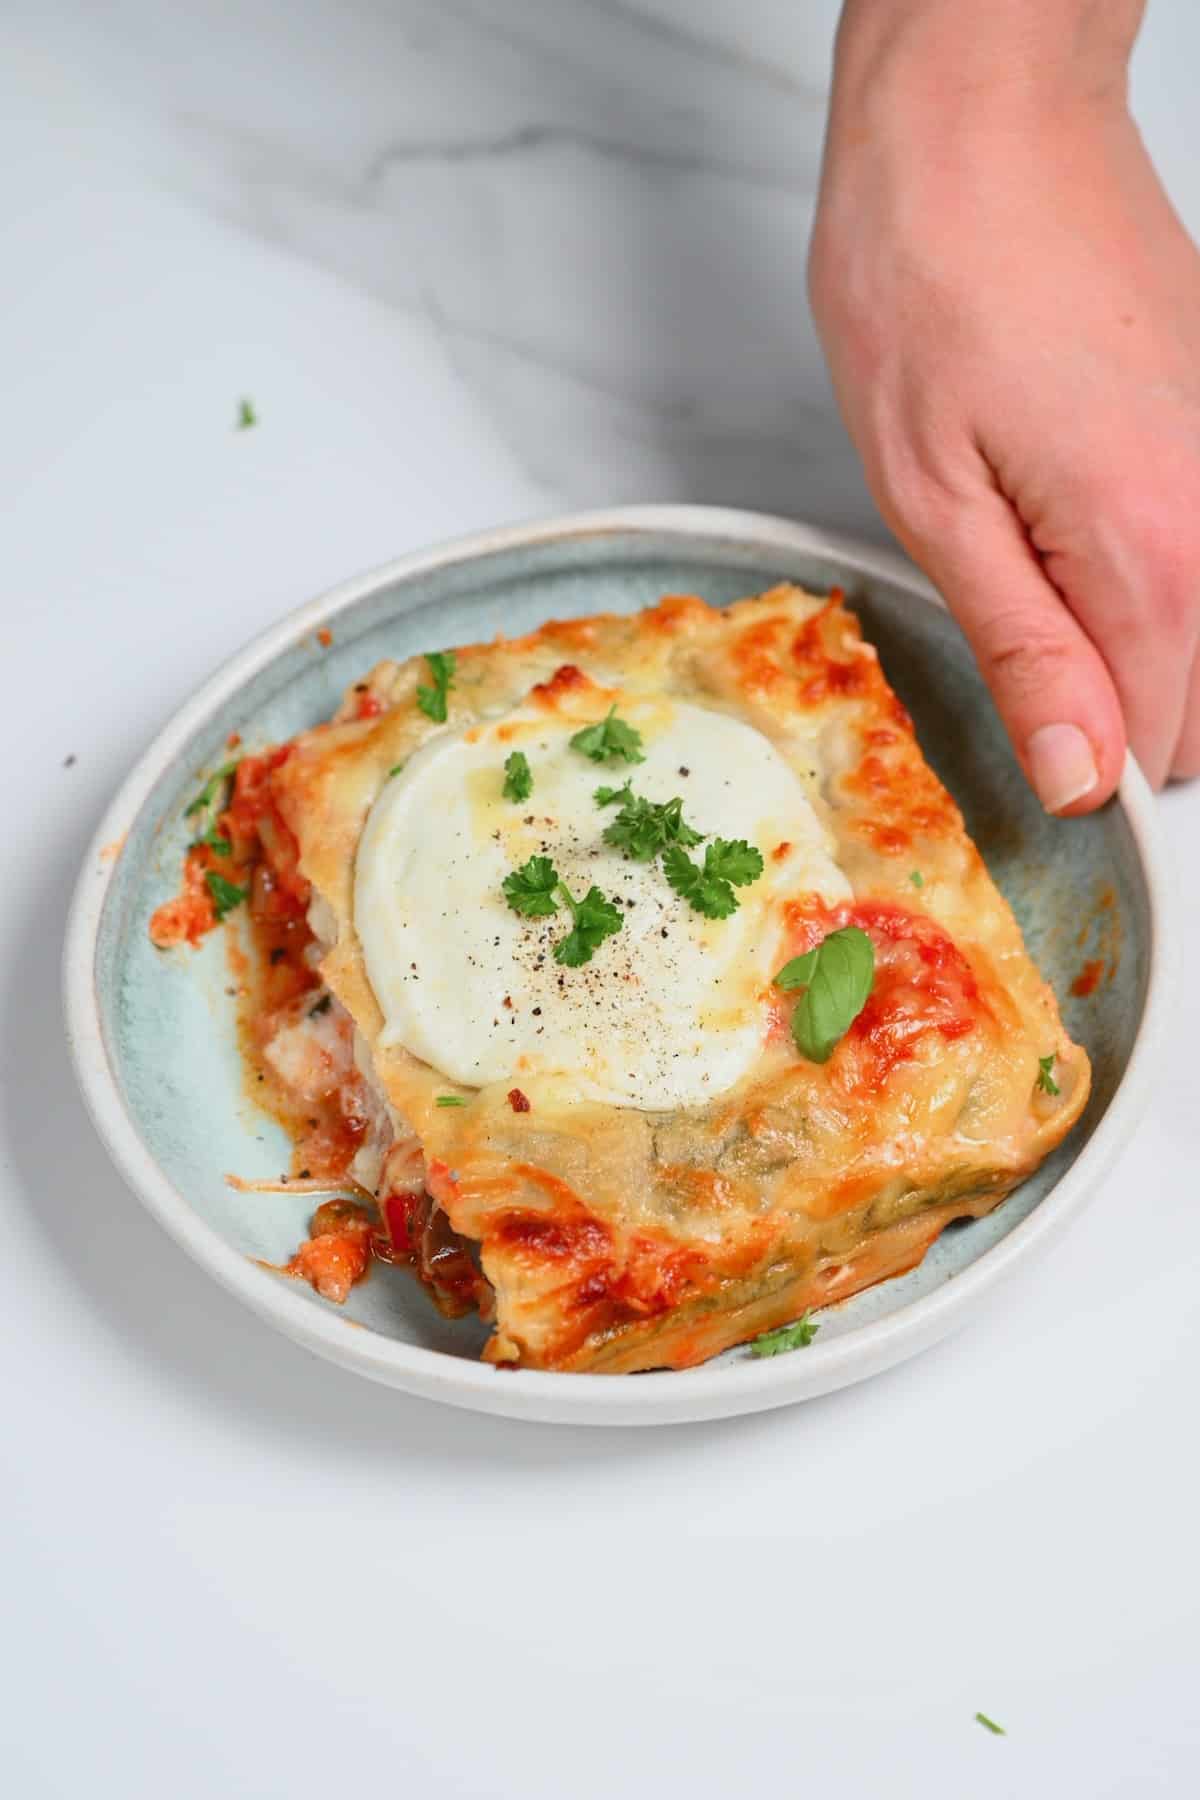 https://www.alphafoodie.com/wp-content/uploads/2021/04/Vegetable-lasagna-A-serving-of-vegetable-lasagna.jpeg